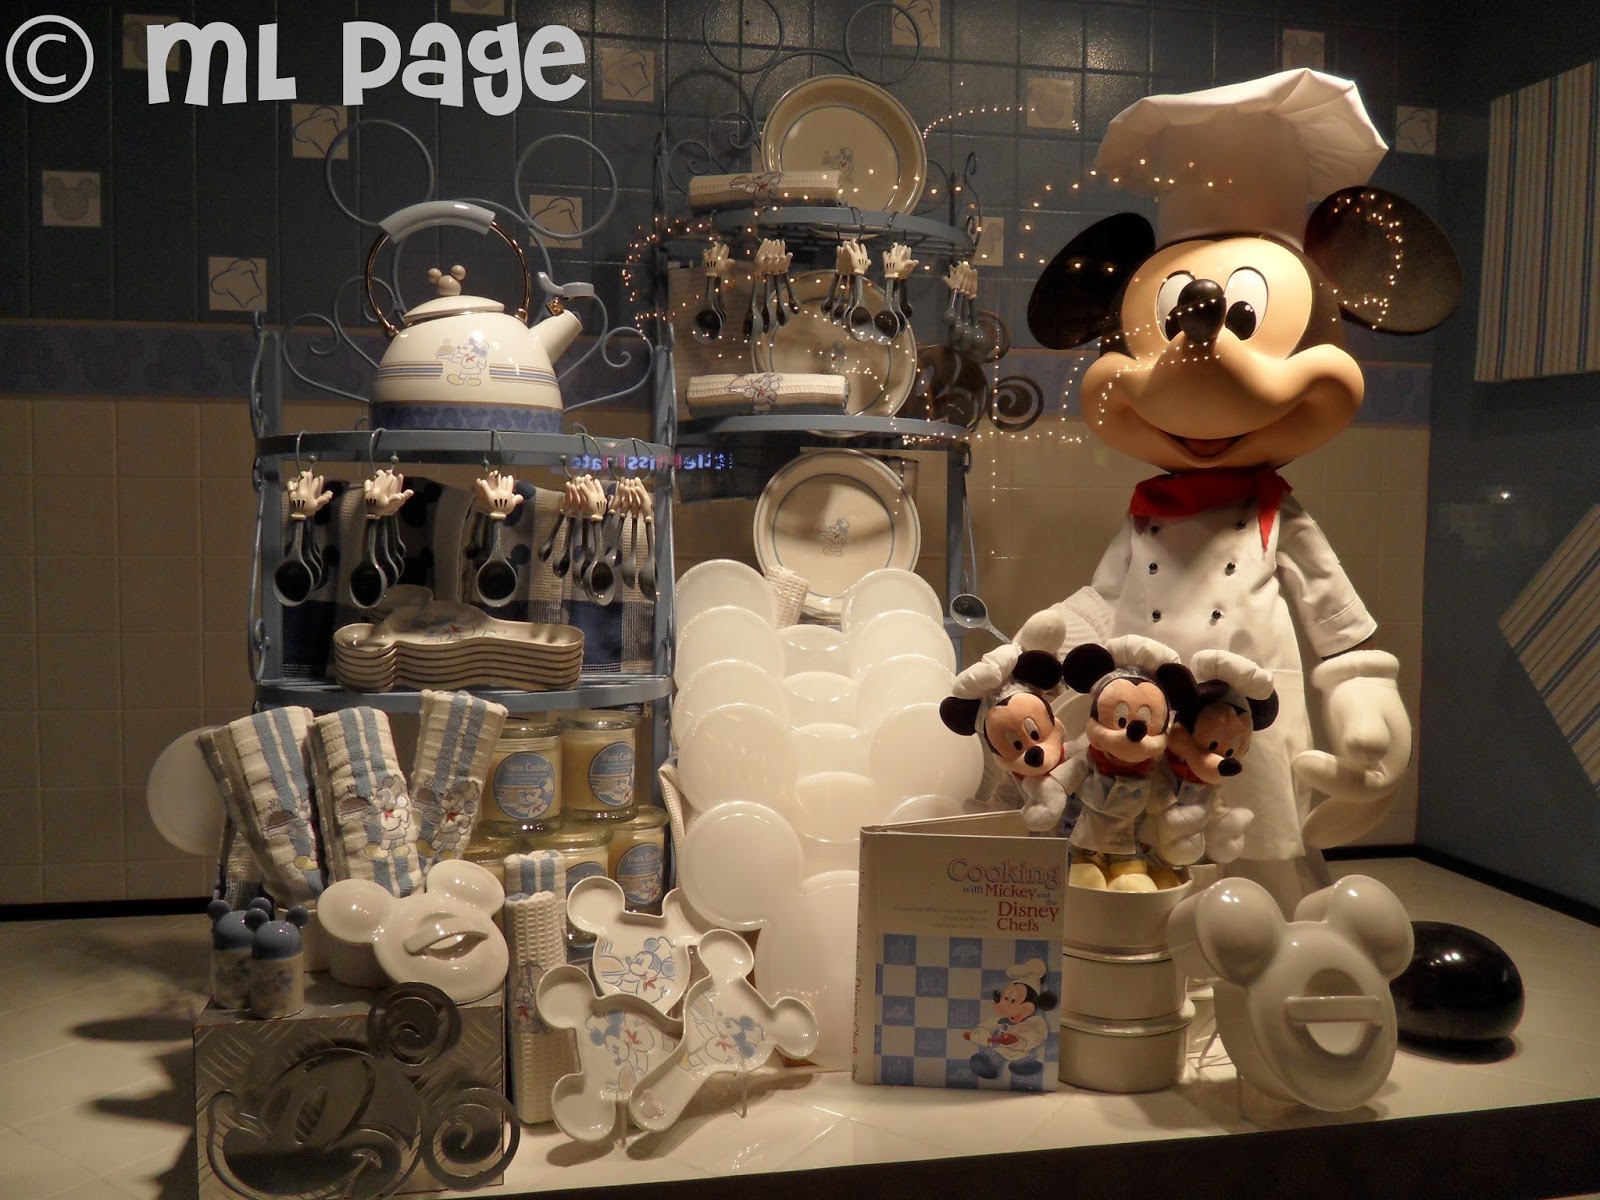 Picturing Disney: In the Disney Kitchen